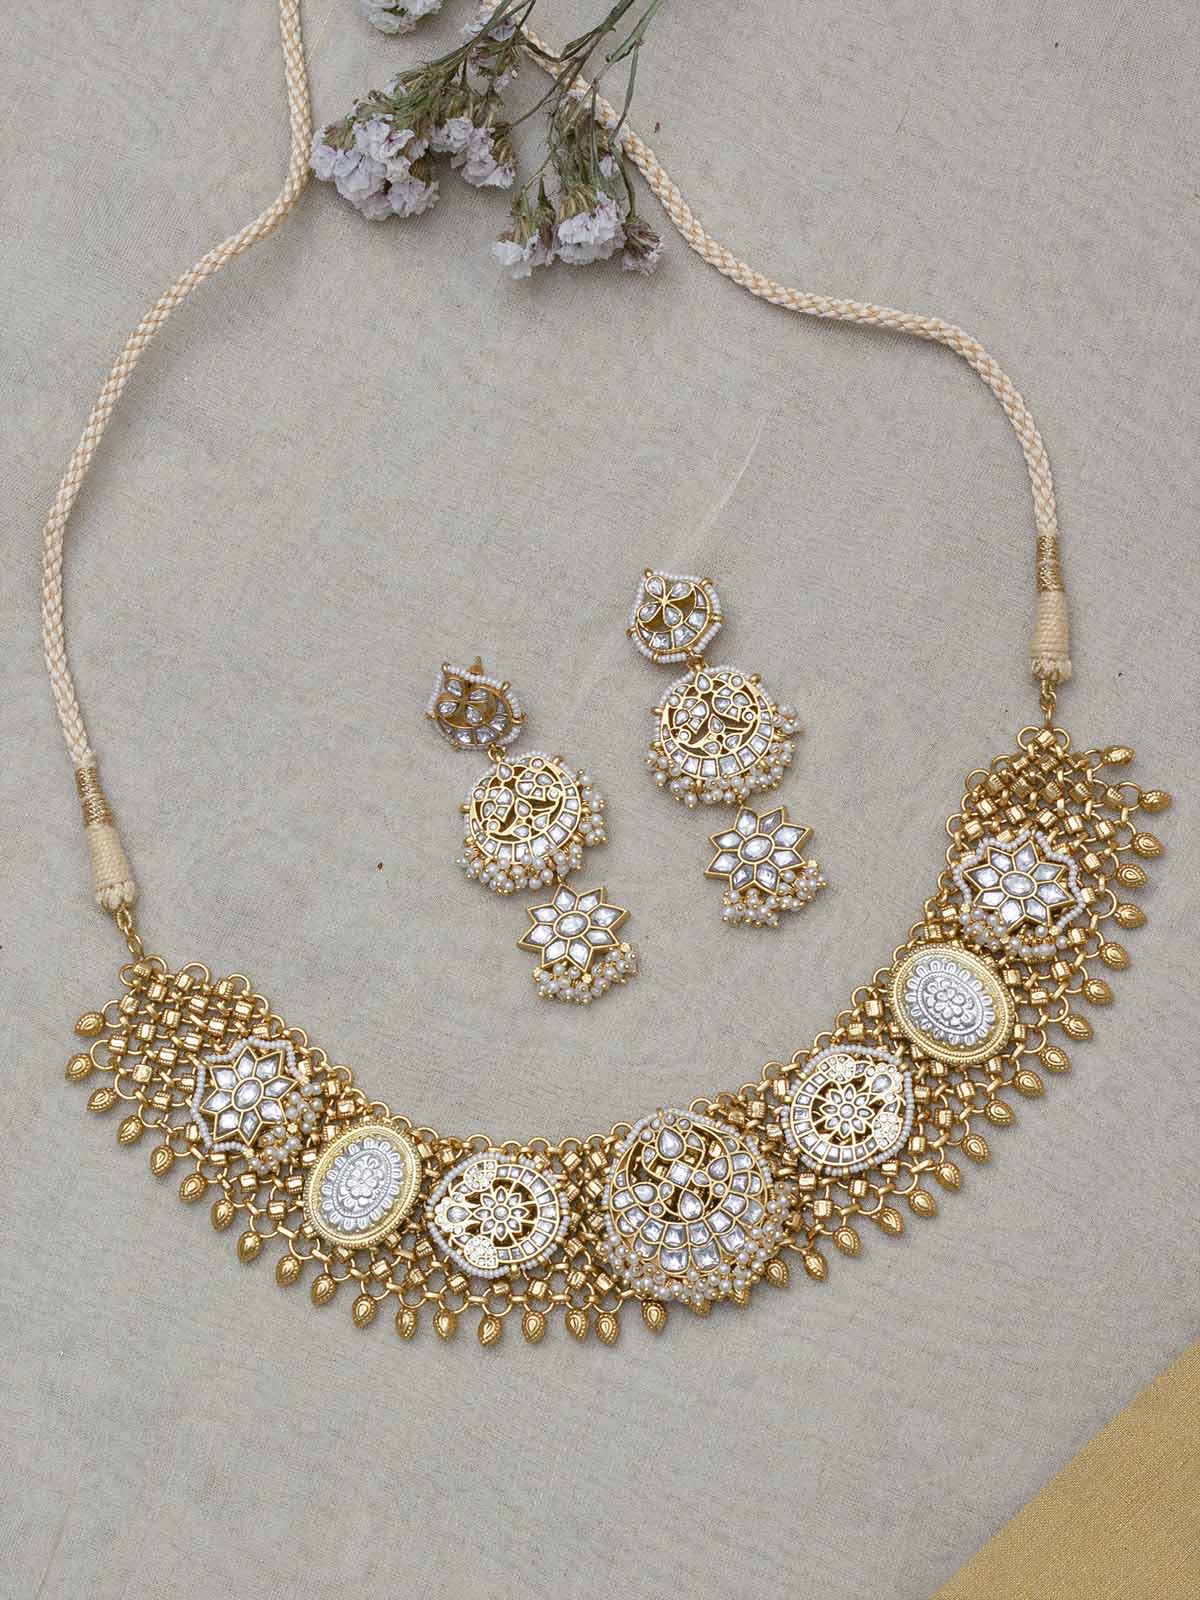 MR-S574W - White Color Gold Plated Mishr Short Necklace Set